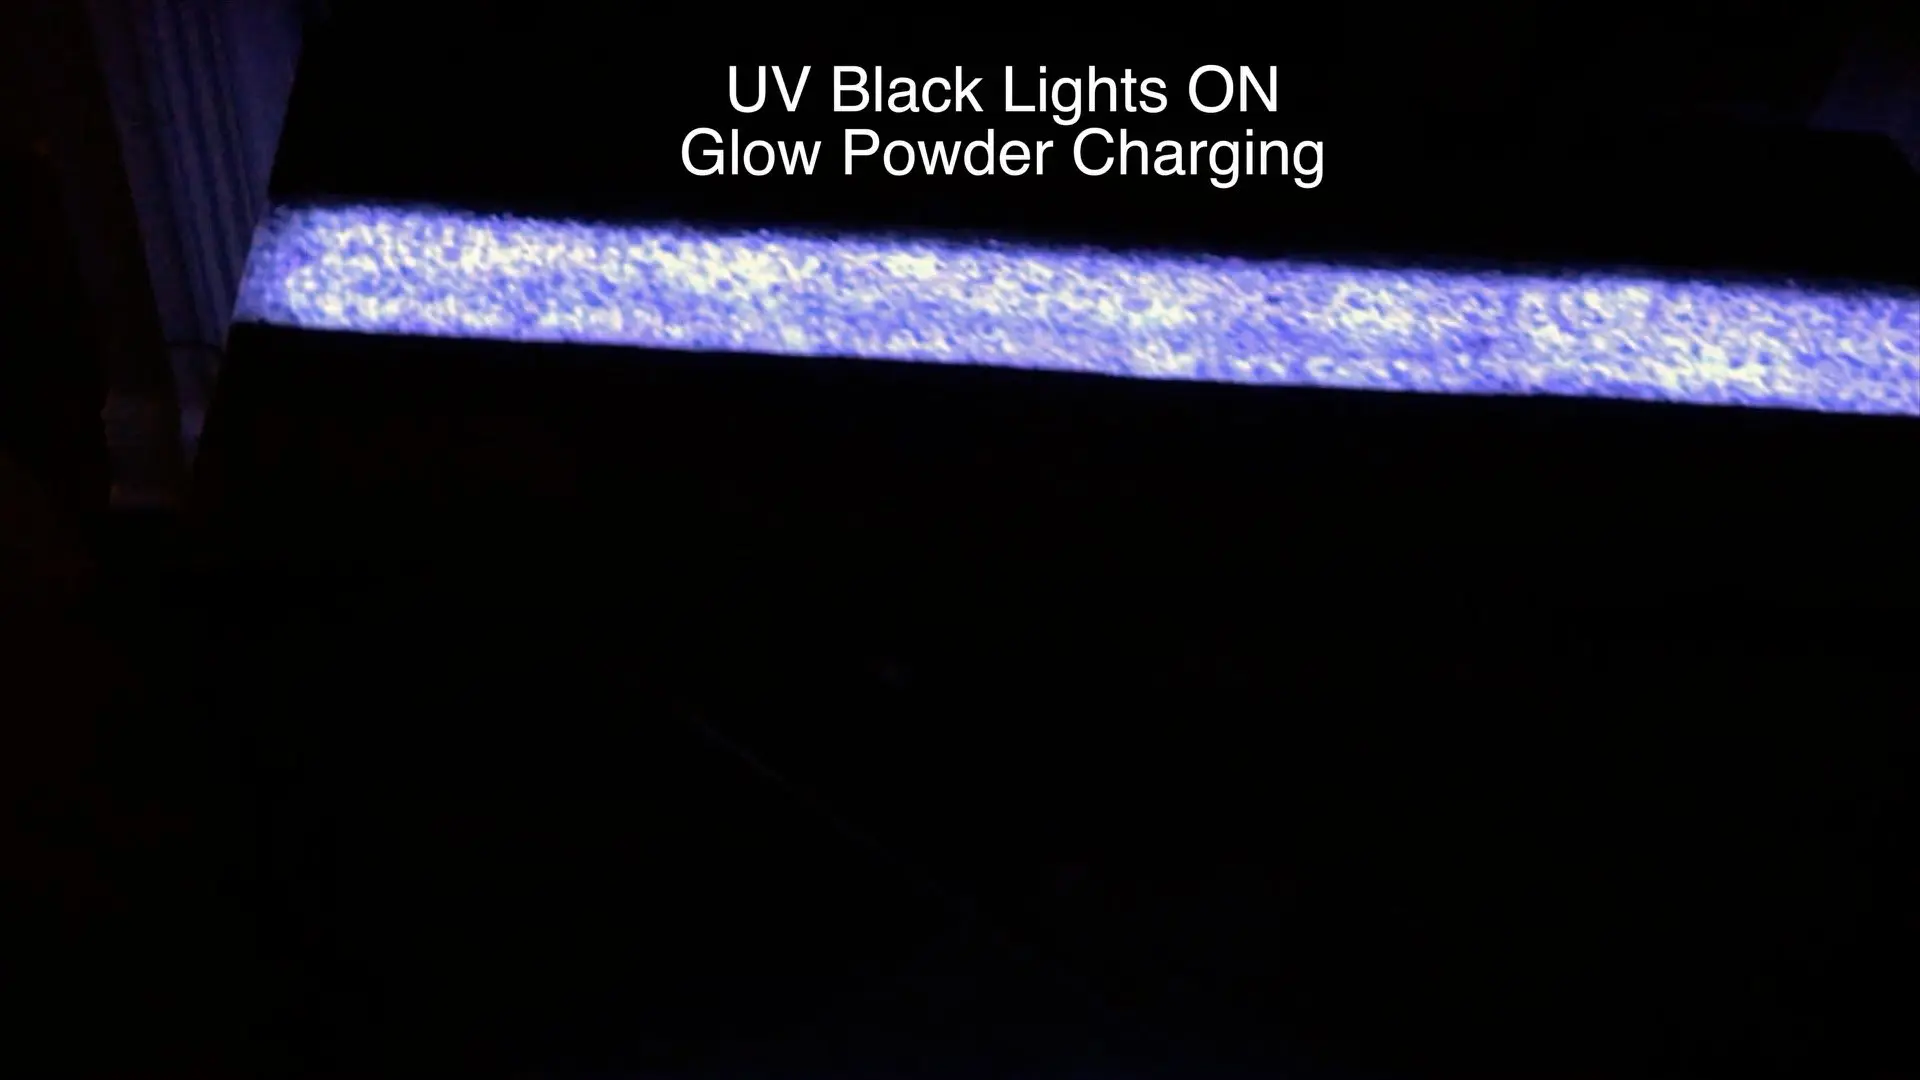 epoxy resin river table UV lights charging glow powder